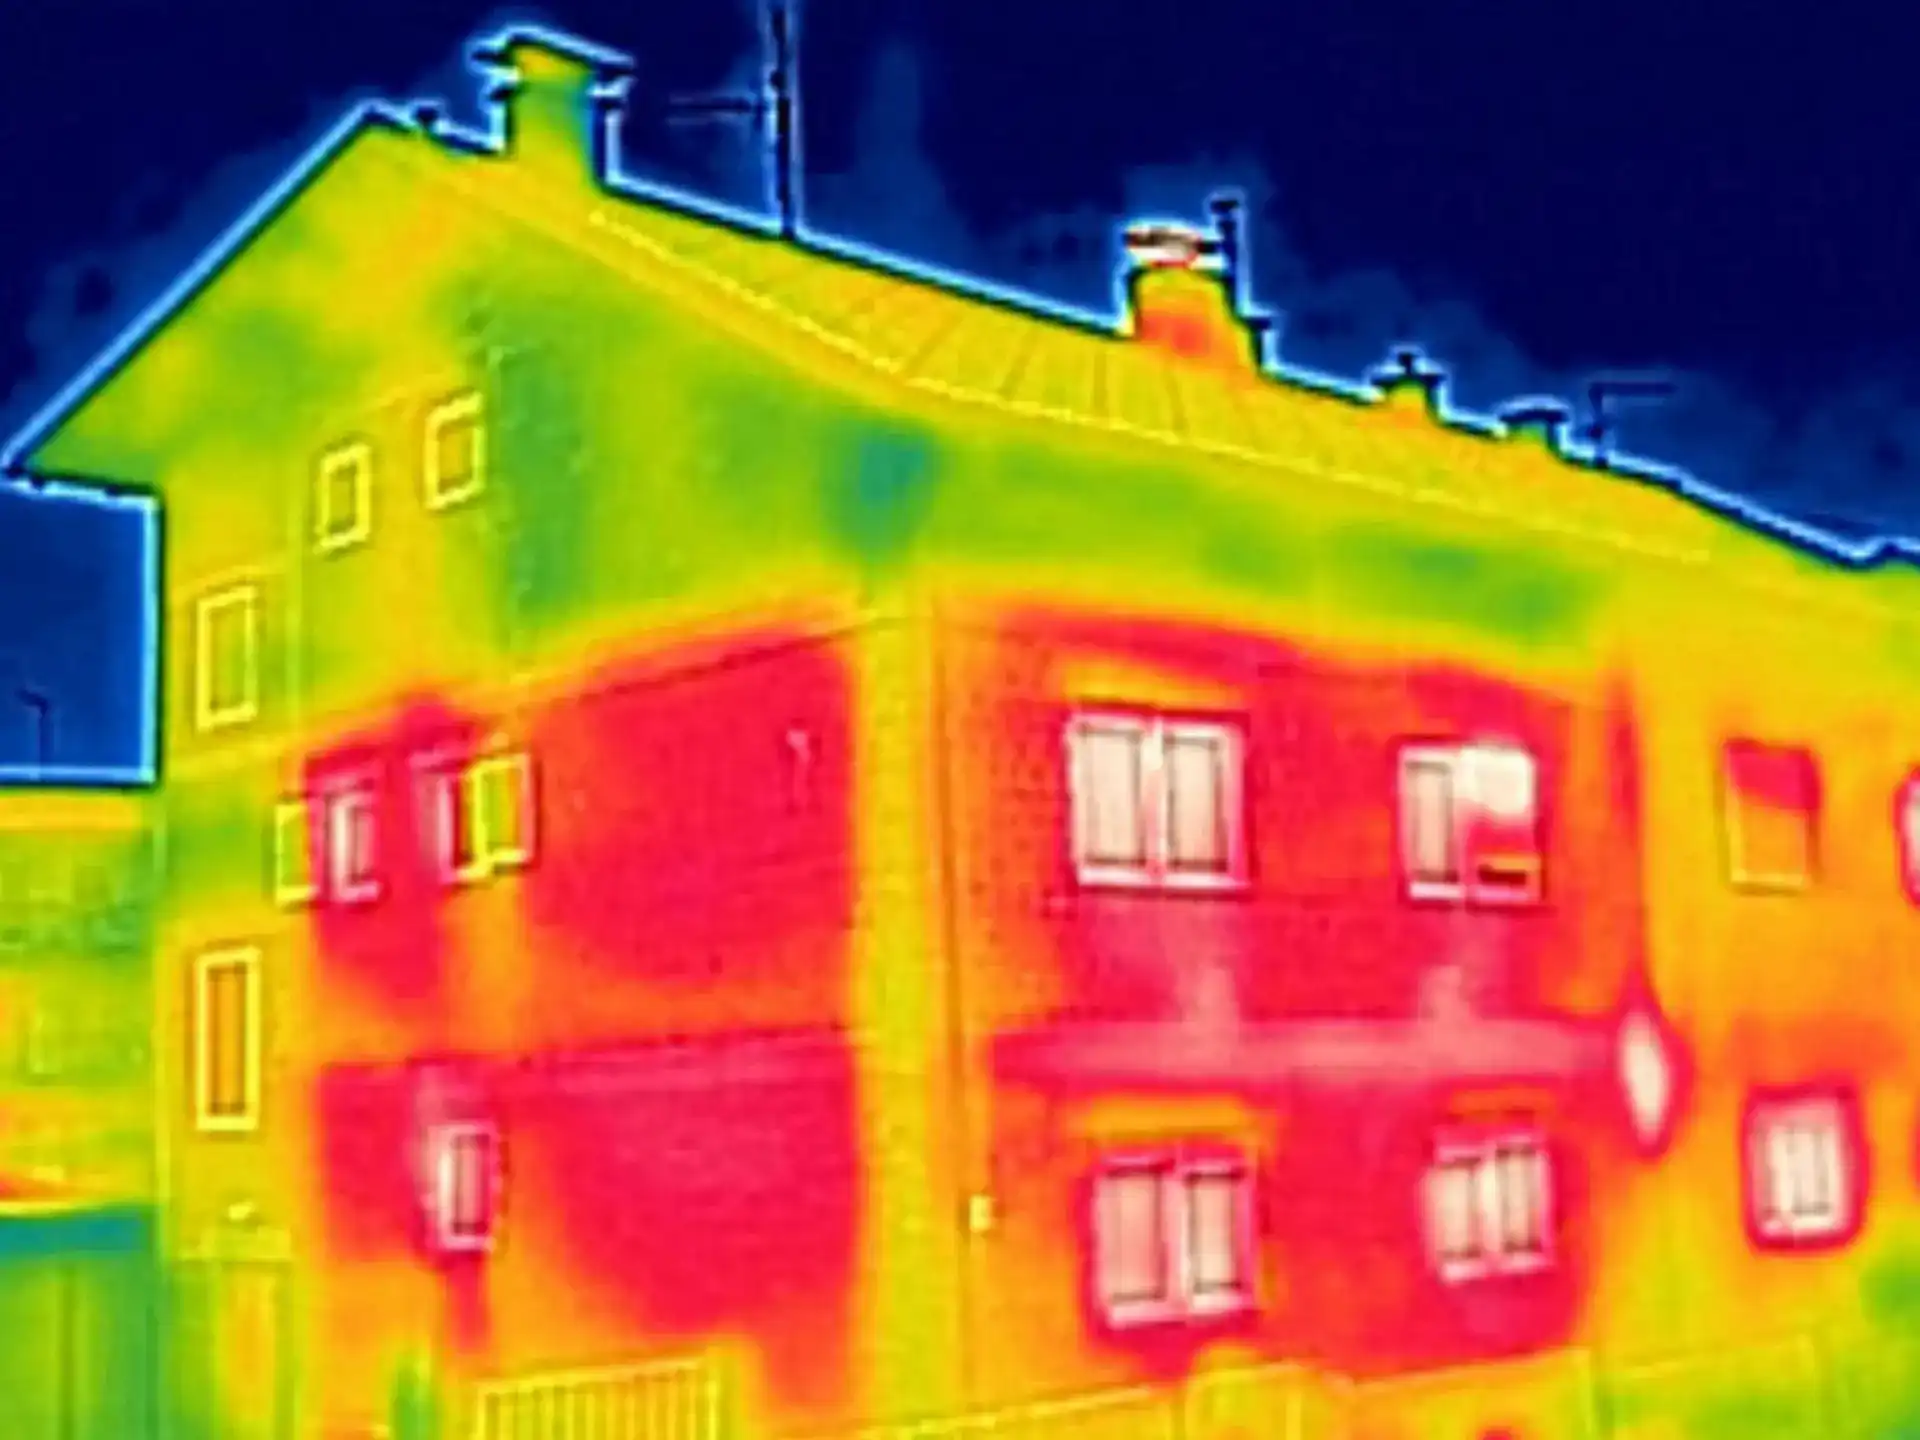 Thermal surveys across the UK